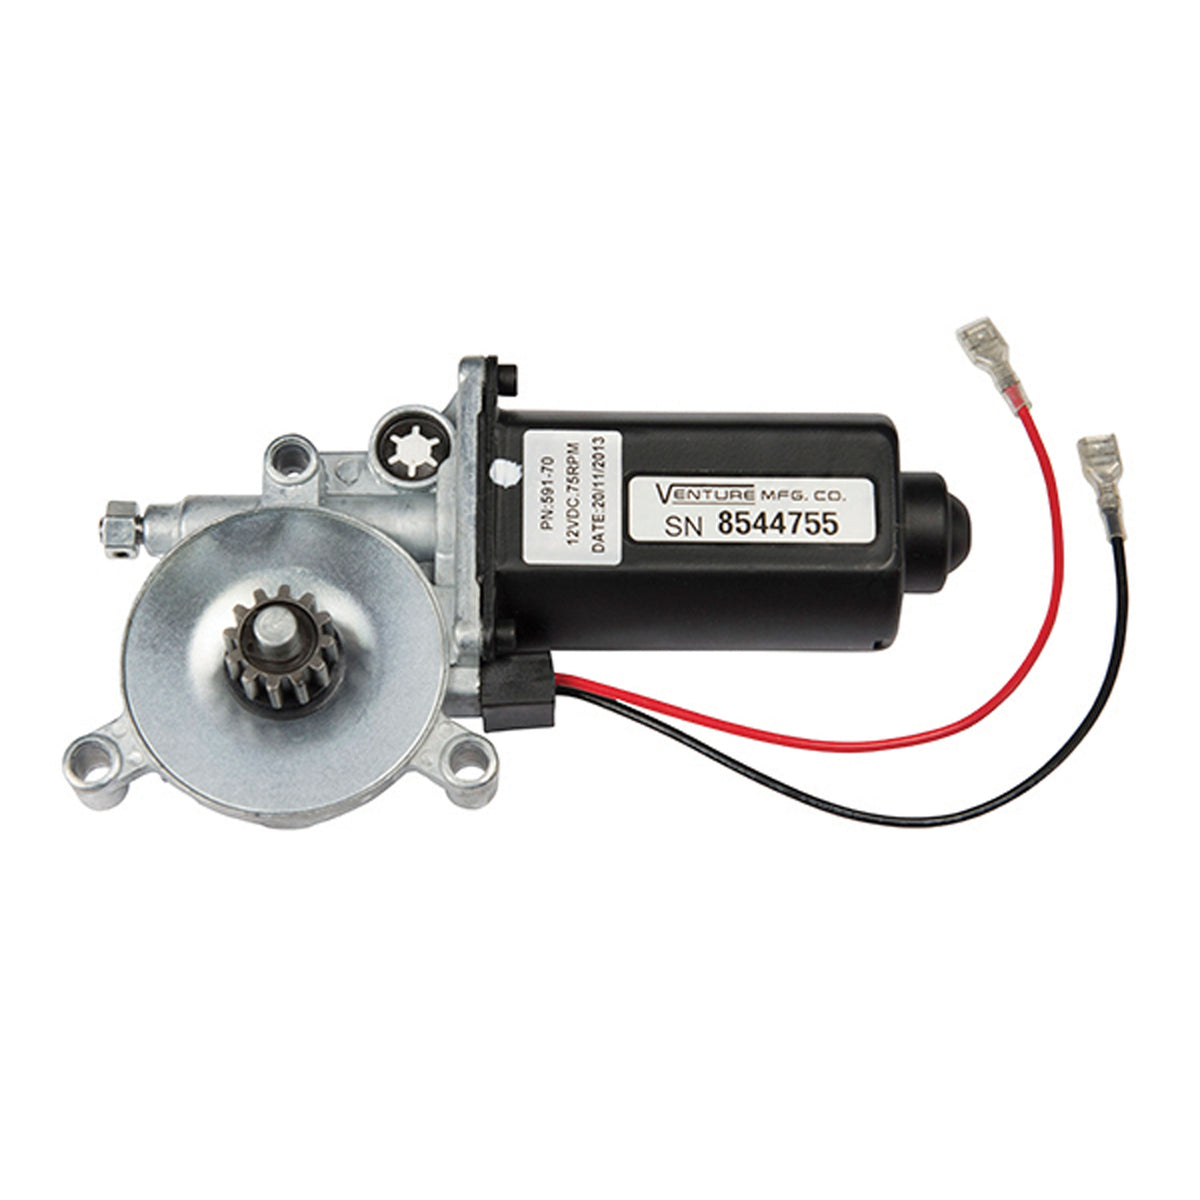 Lippert 266149 Solera Power Awning Replacement Motor